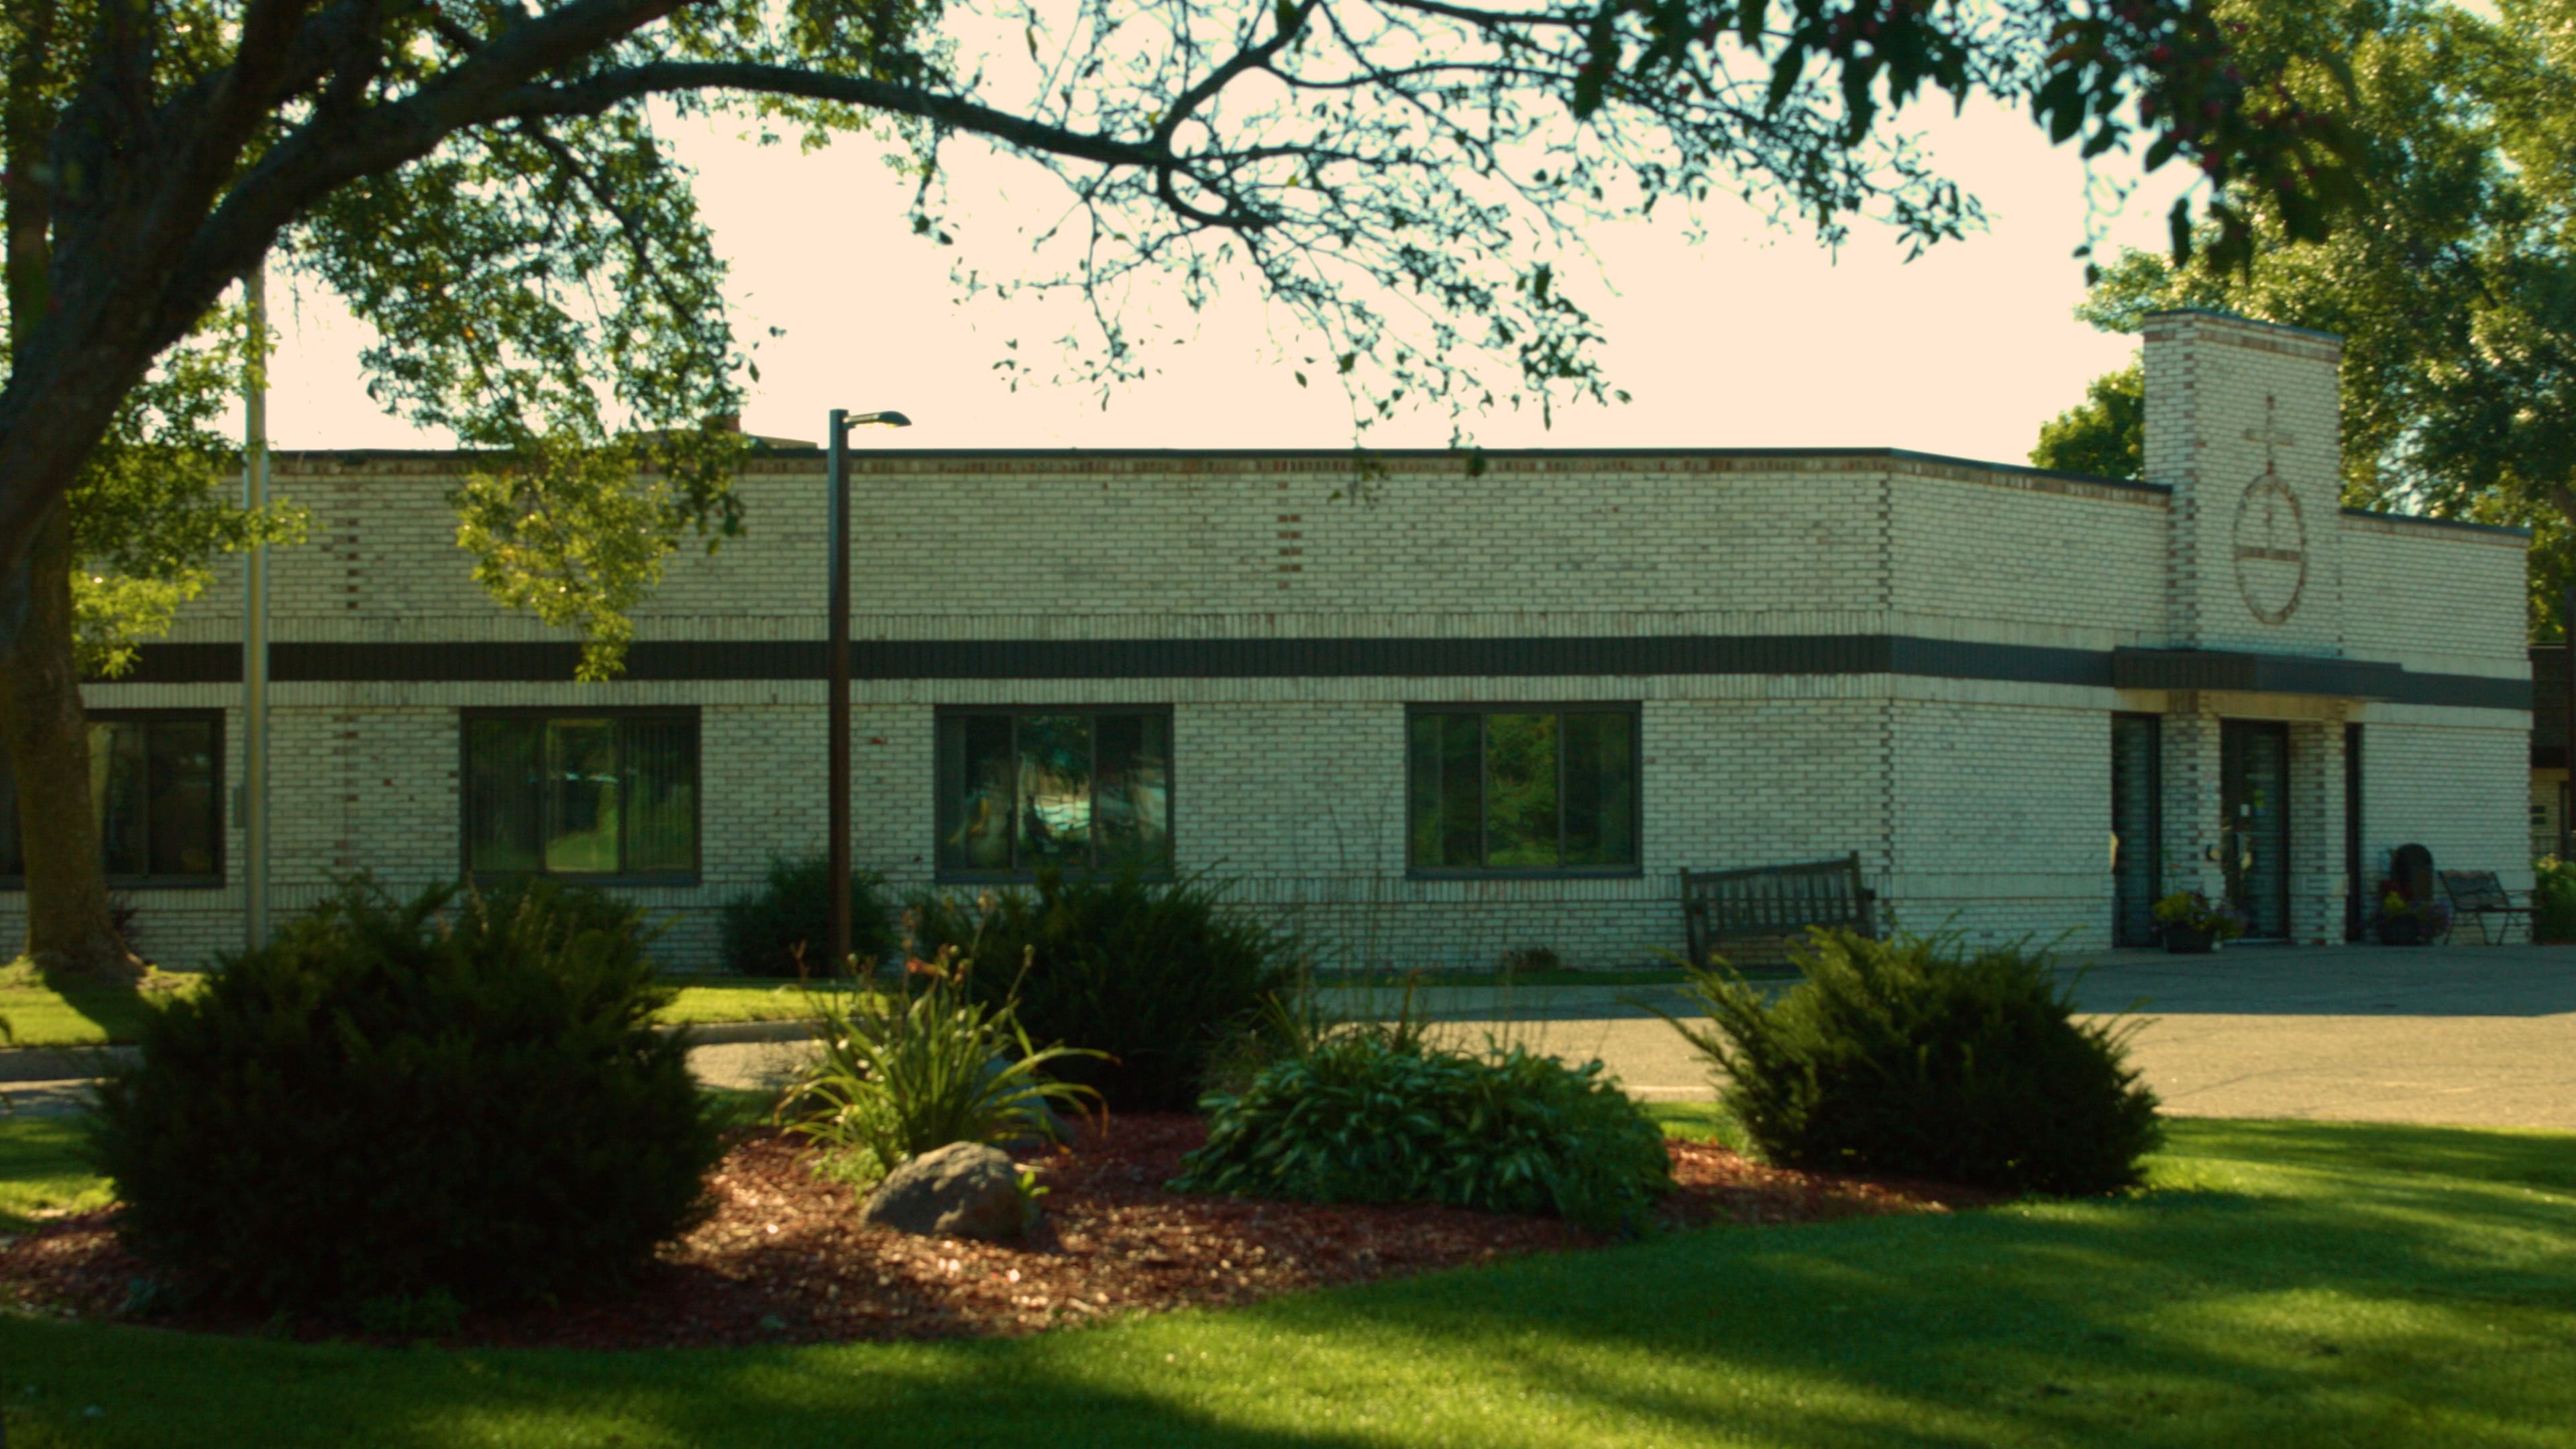 Meeker Manor Rehabilitation Center